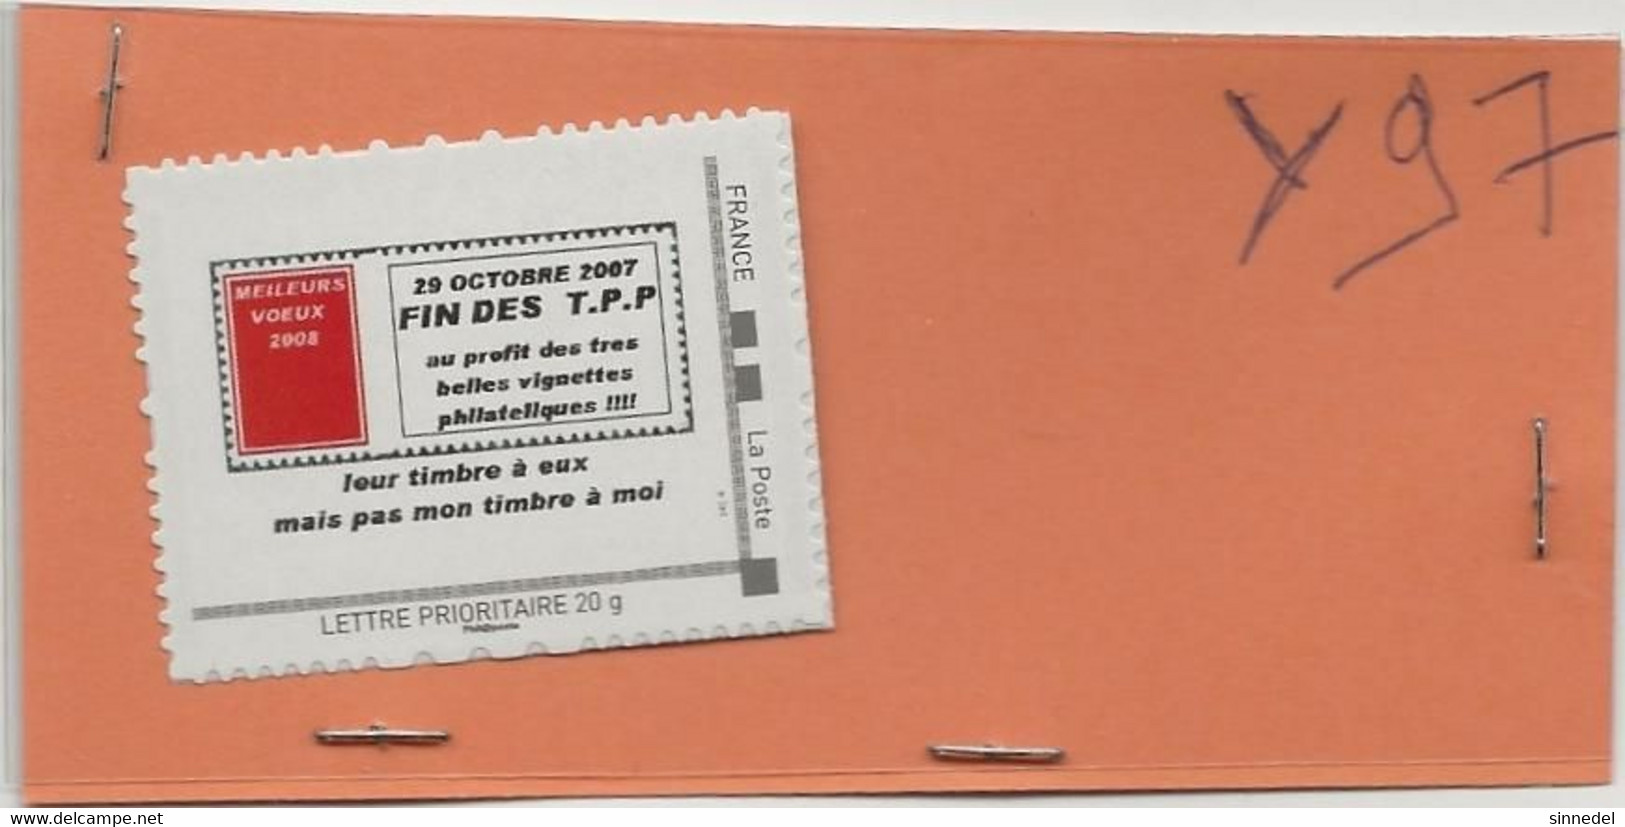 TIMBRE ADHESIF  TVP PRIORITAIRE 20 GRS  PHIL@POSTE  THEME LA POSTE FIN DES TPP LE 29 OCTOBRE 2007 - Unused Stamps